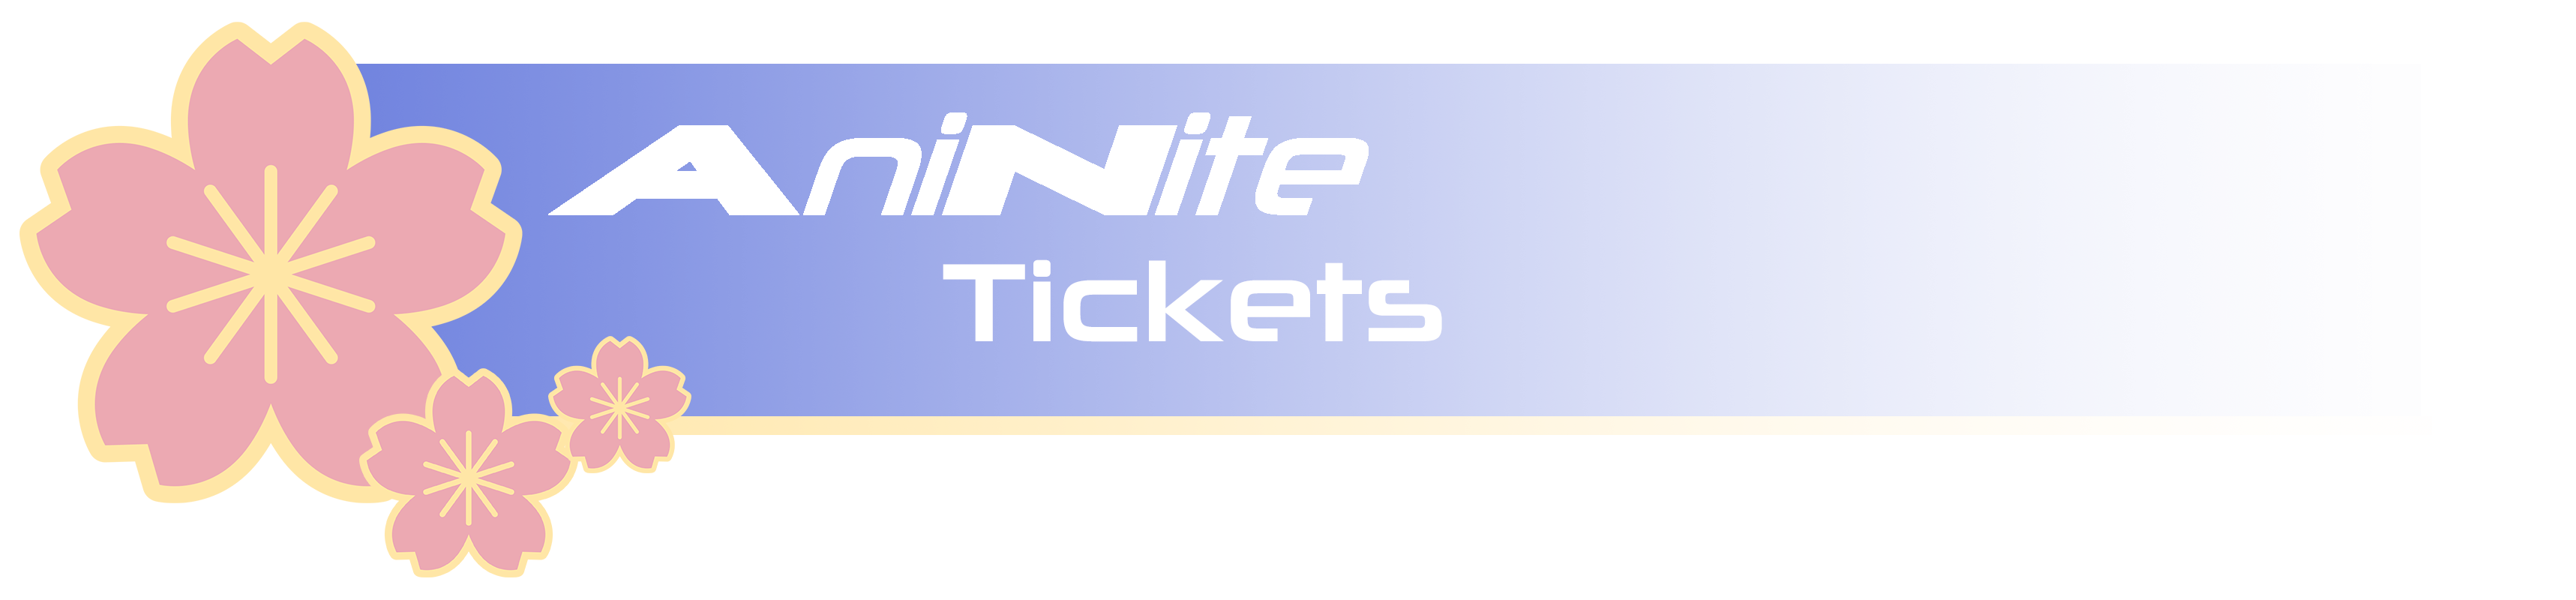 Aninite Tickets